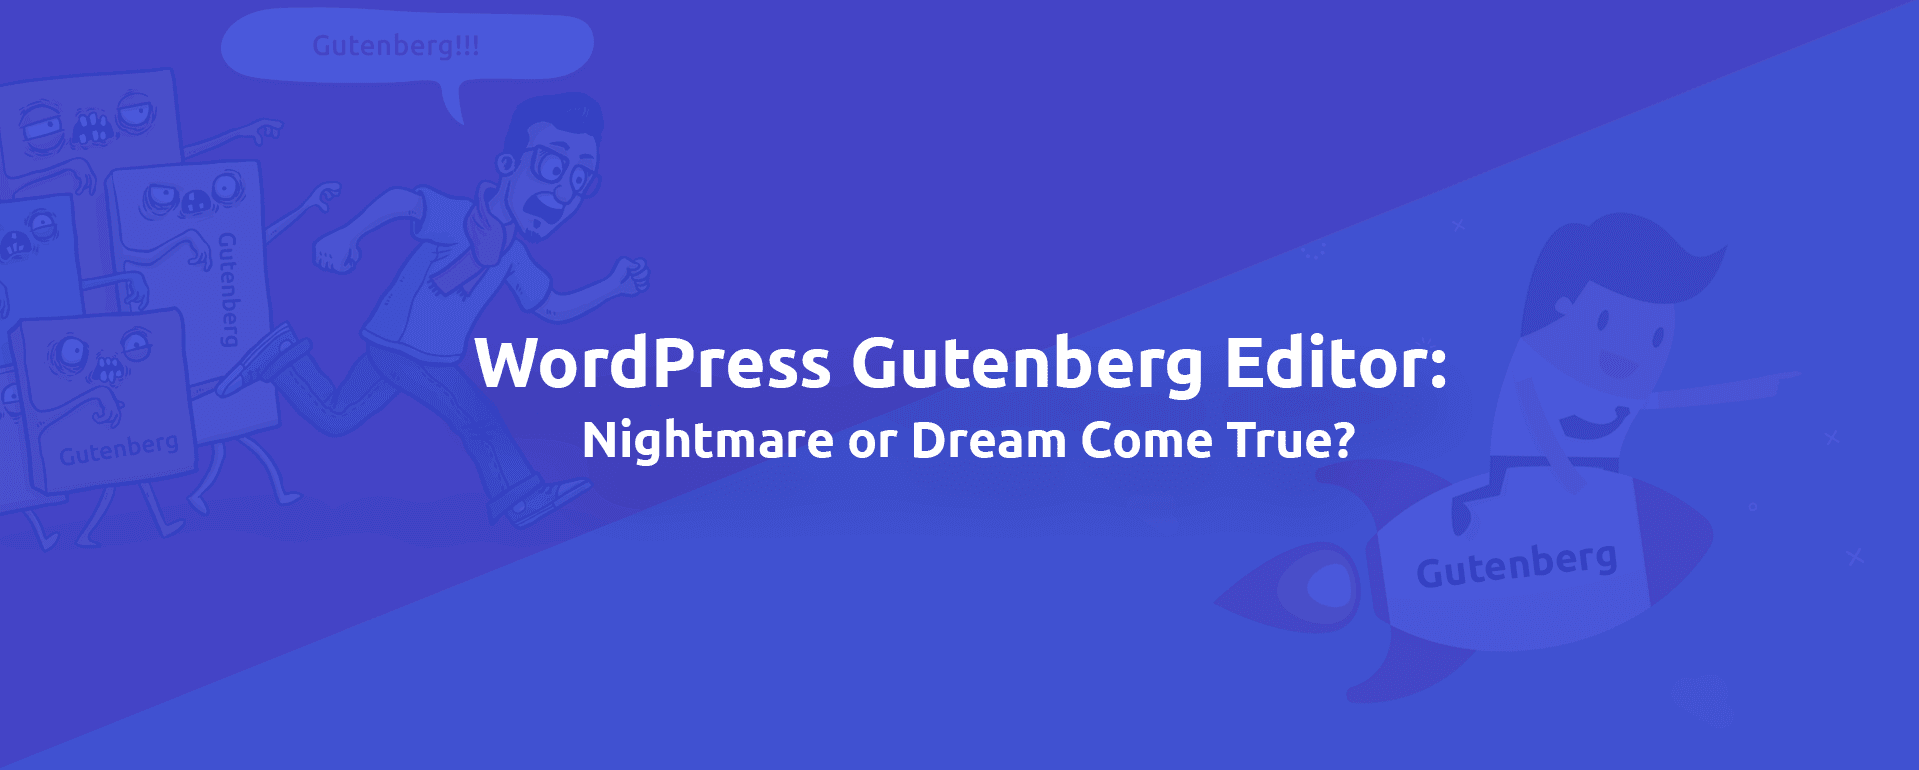 WordPress Gutenberg Editor: Nightmare or Dream Come True?